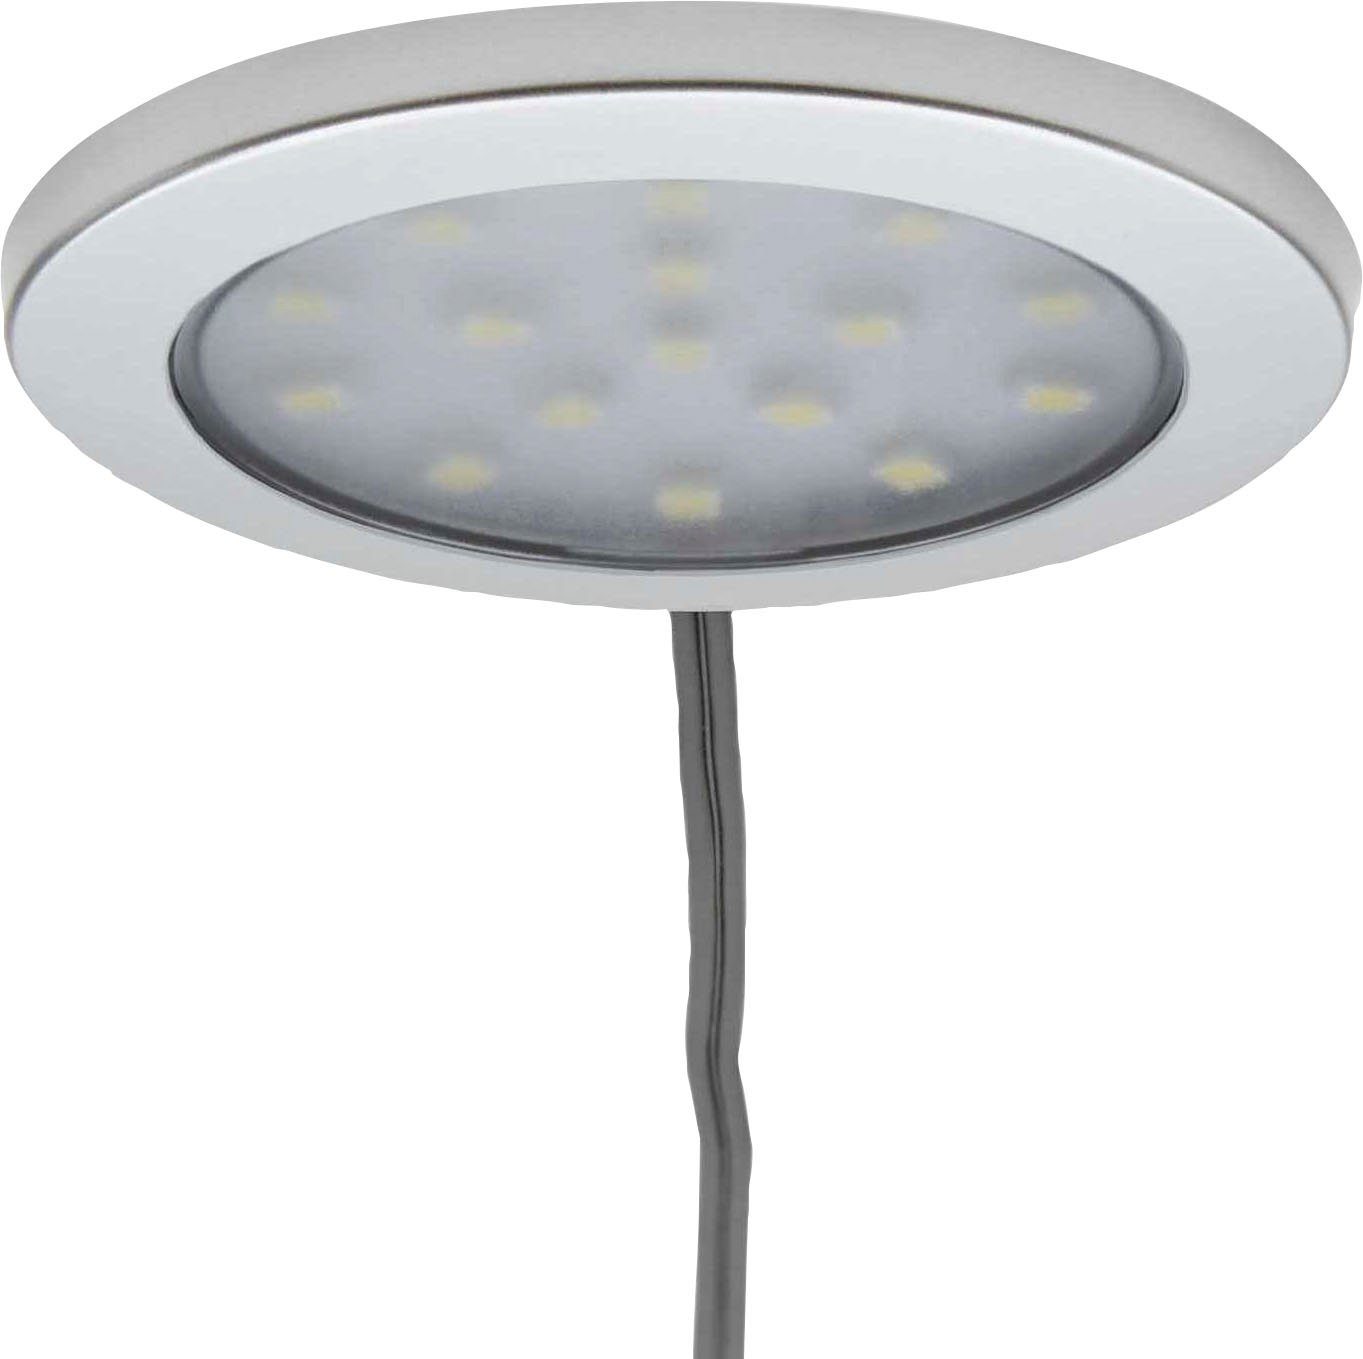 Vitrine STELLA Silber Weiß, silberfarben LED-Beleuchtung, | abschließbar fif 2-türig, Spiegelrückwand, möbel